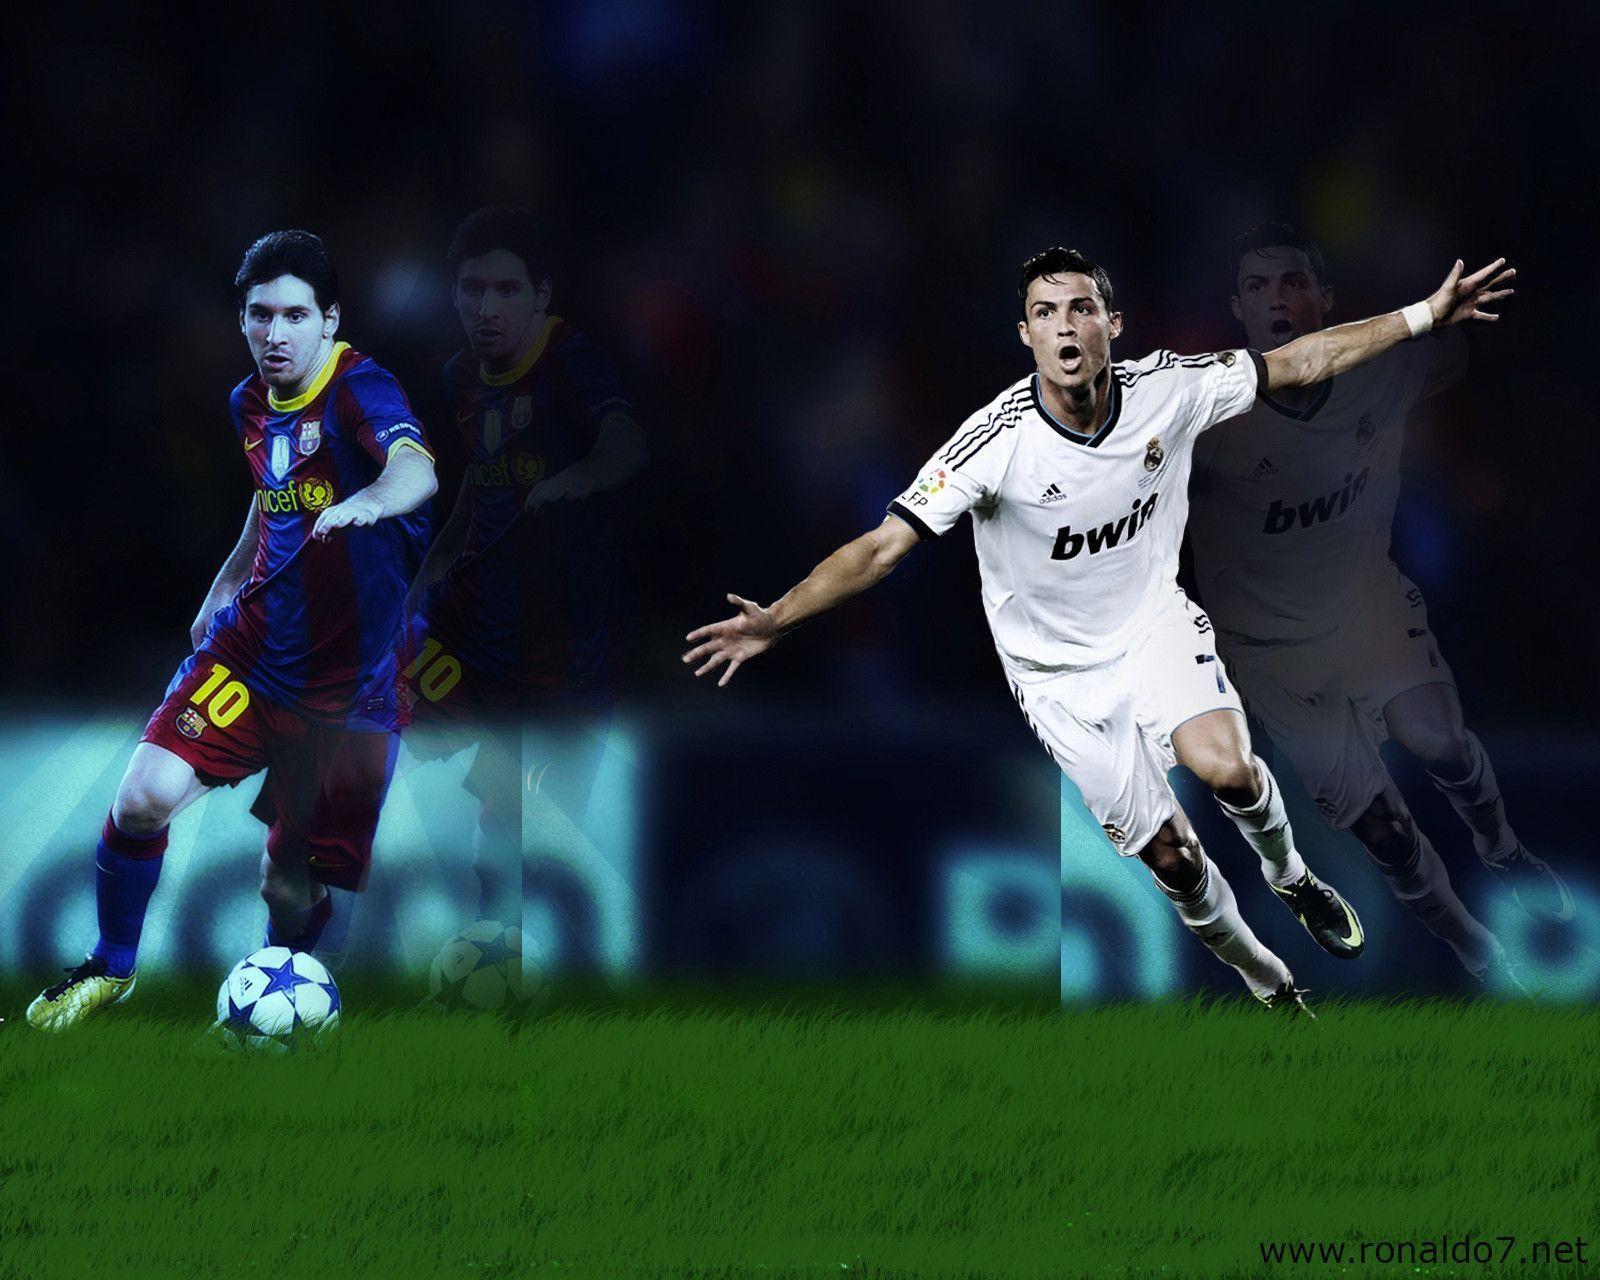 Ronaldo Vs Messi Wallpaper Wallpaper (6370) ilikewalls